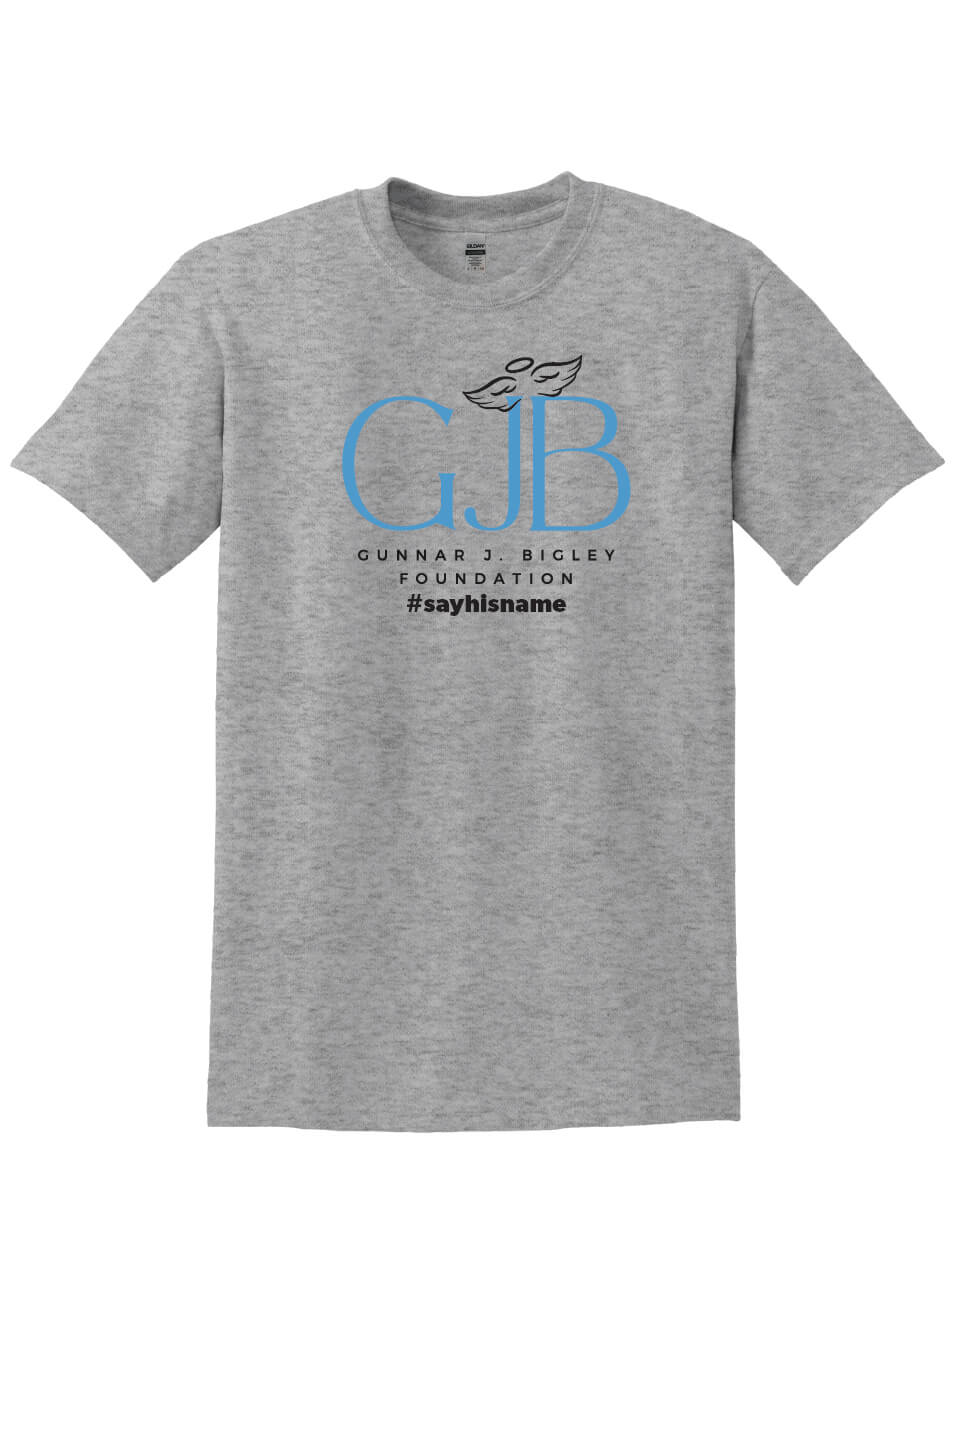 Short Sleeve T-Shirt - Word Art II gray front